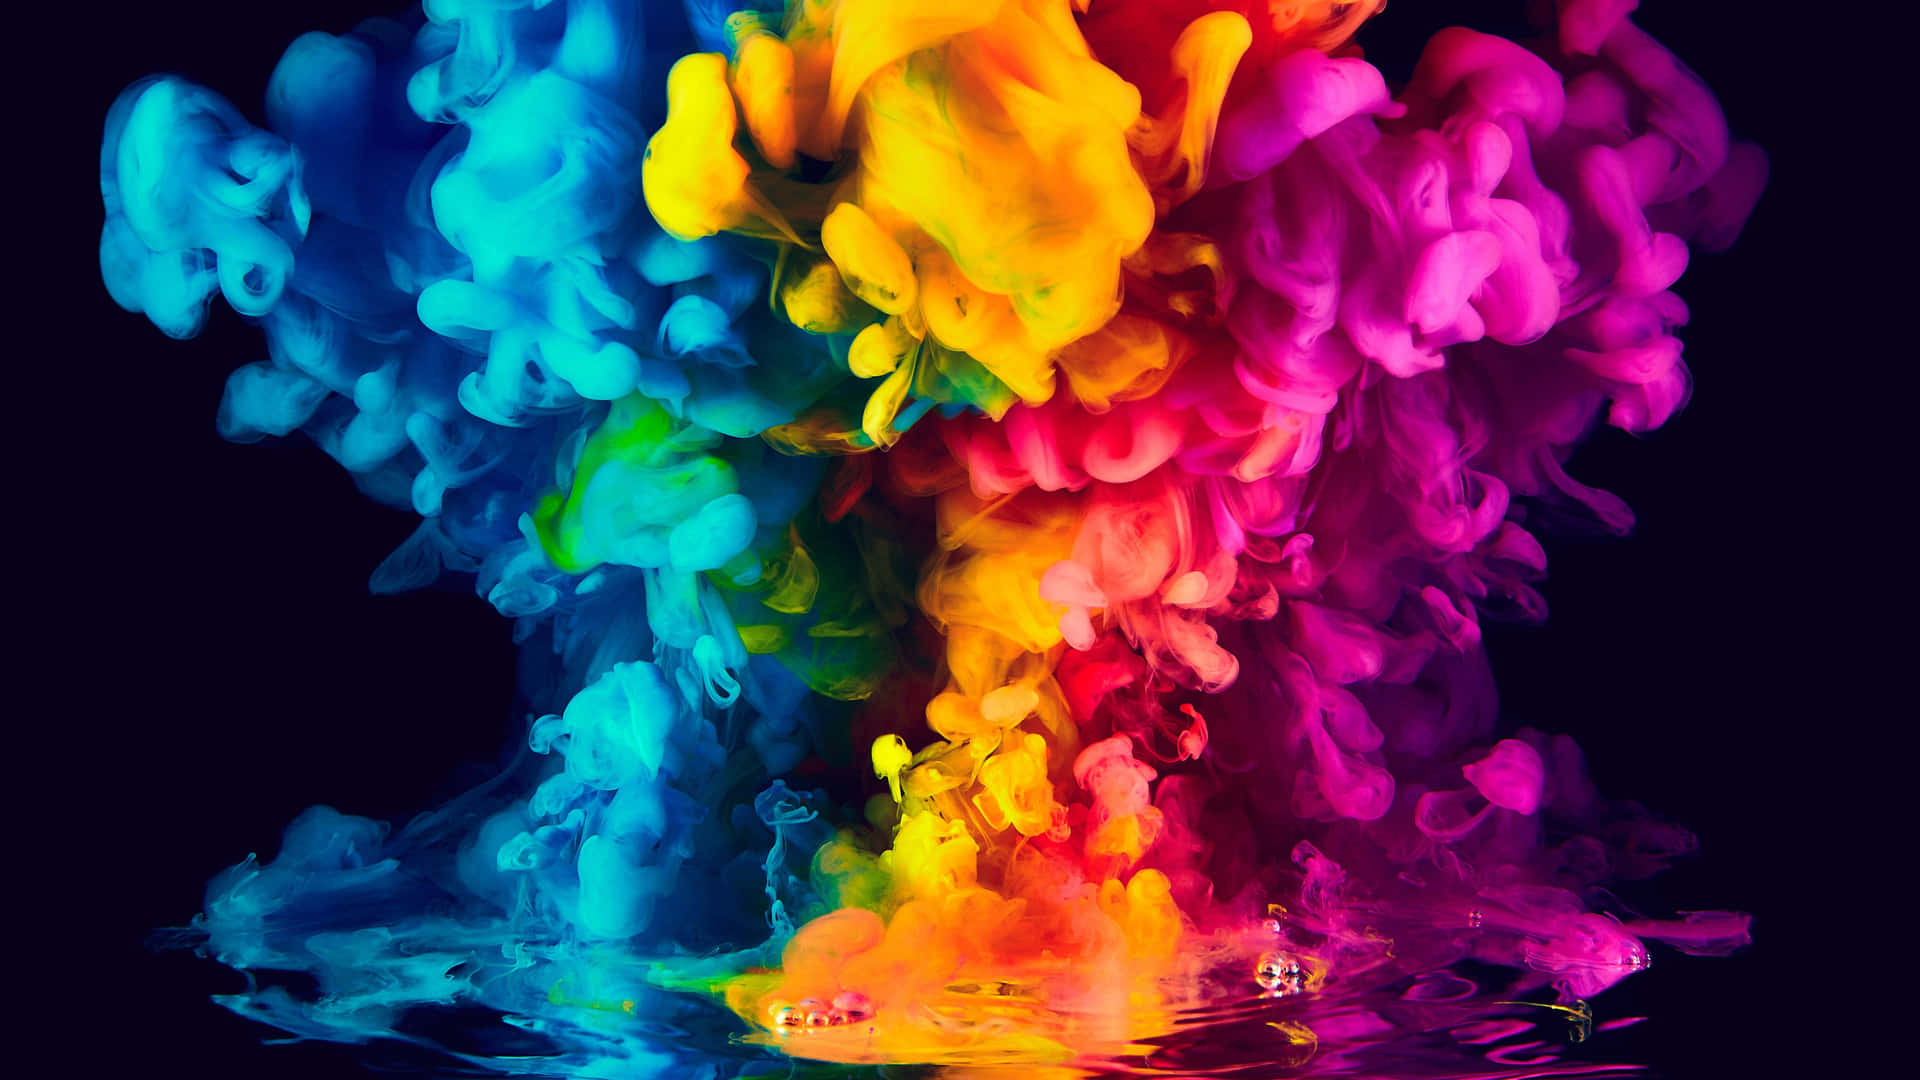 Take in the Colorful Smoke Wallpaper